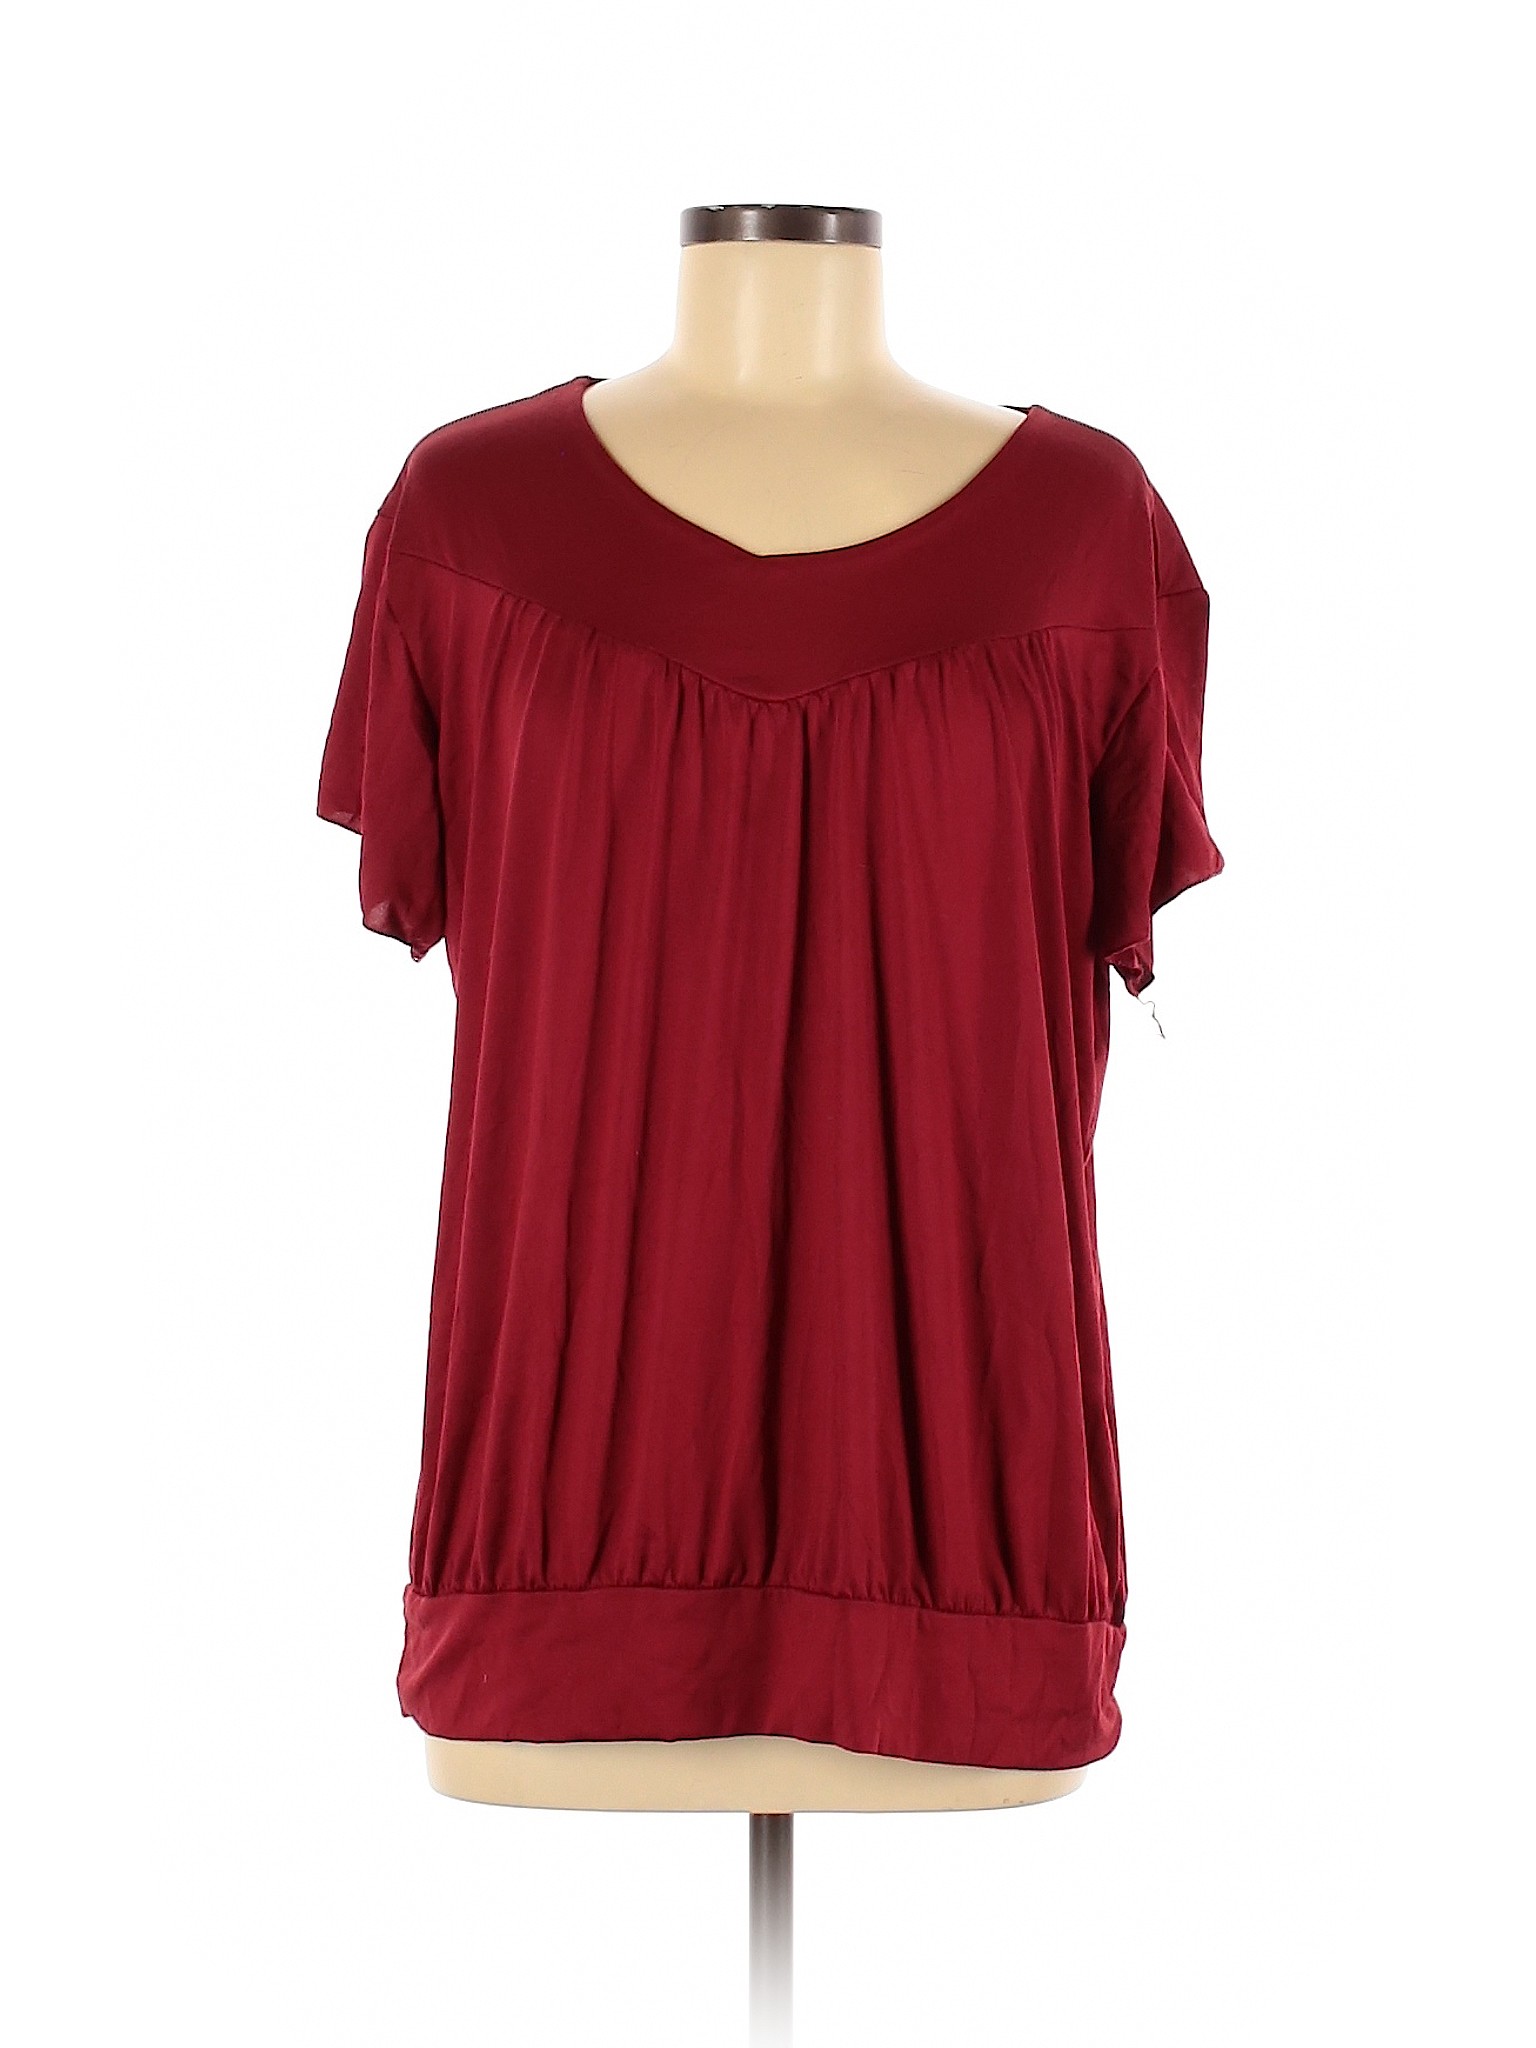 Unbranded Women Red Short Sleeve Blouse XL | eBay